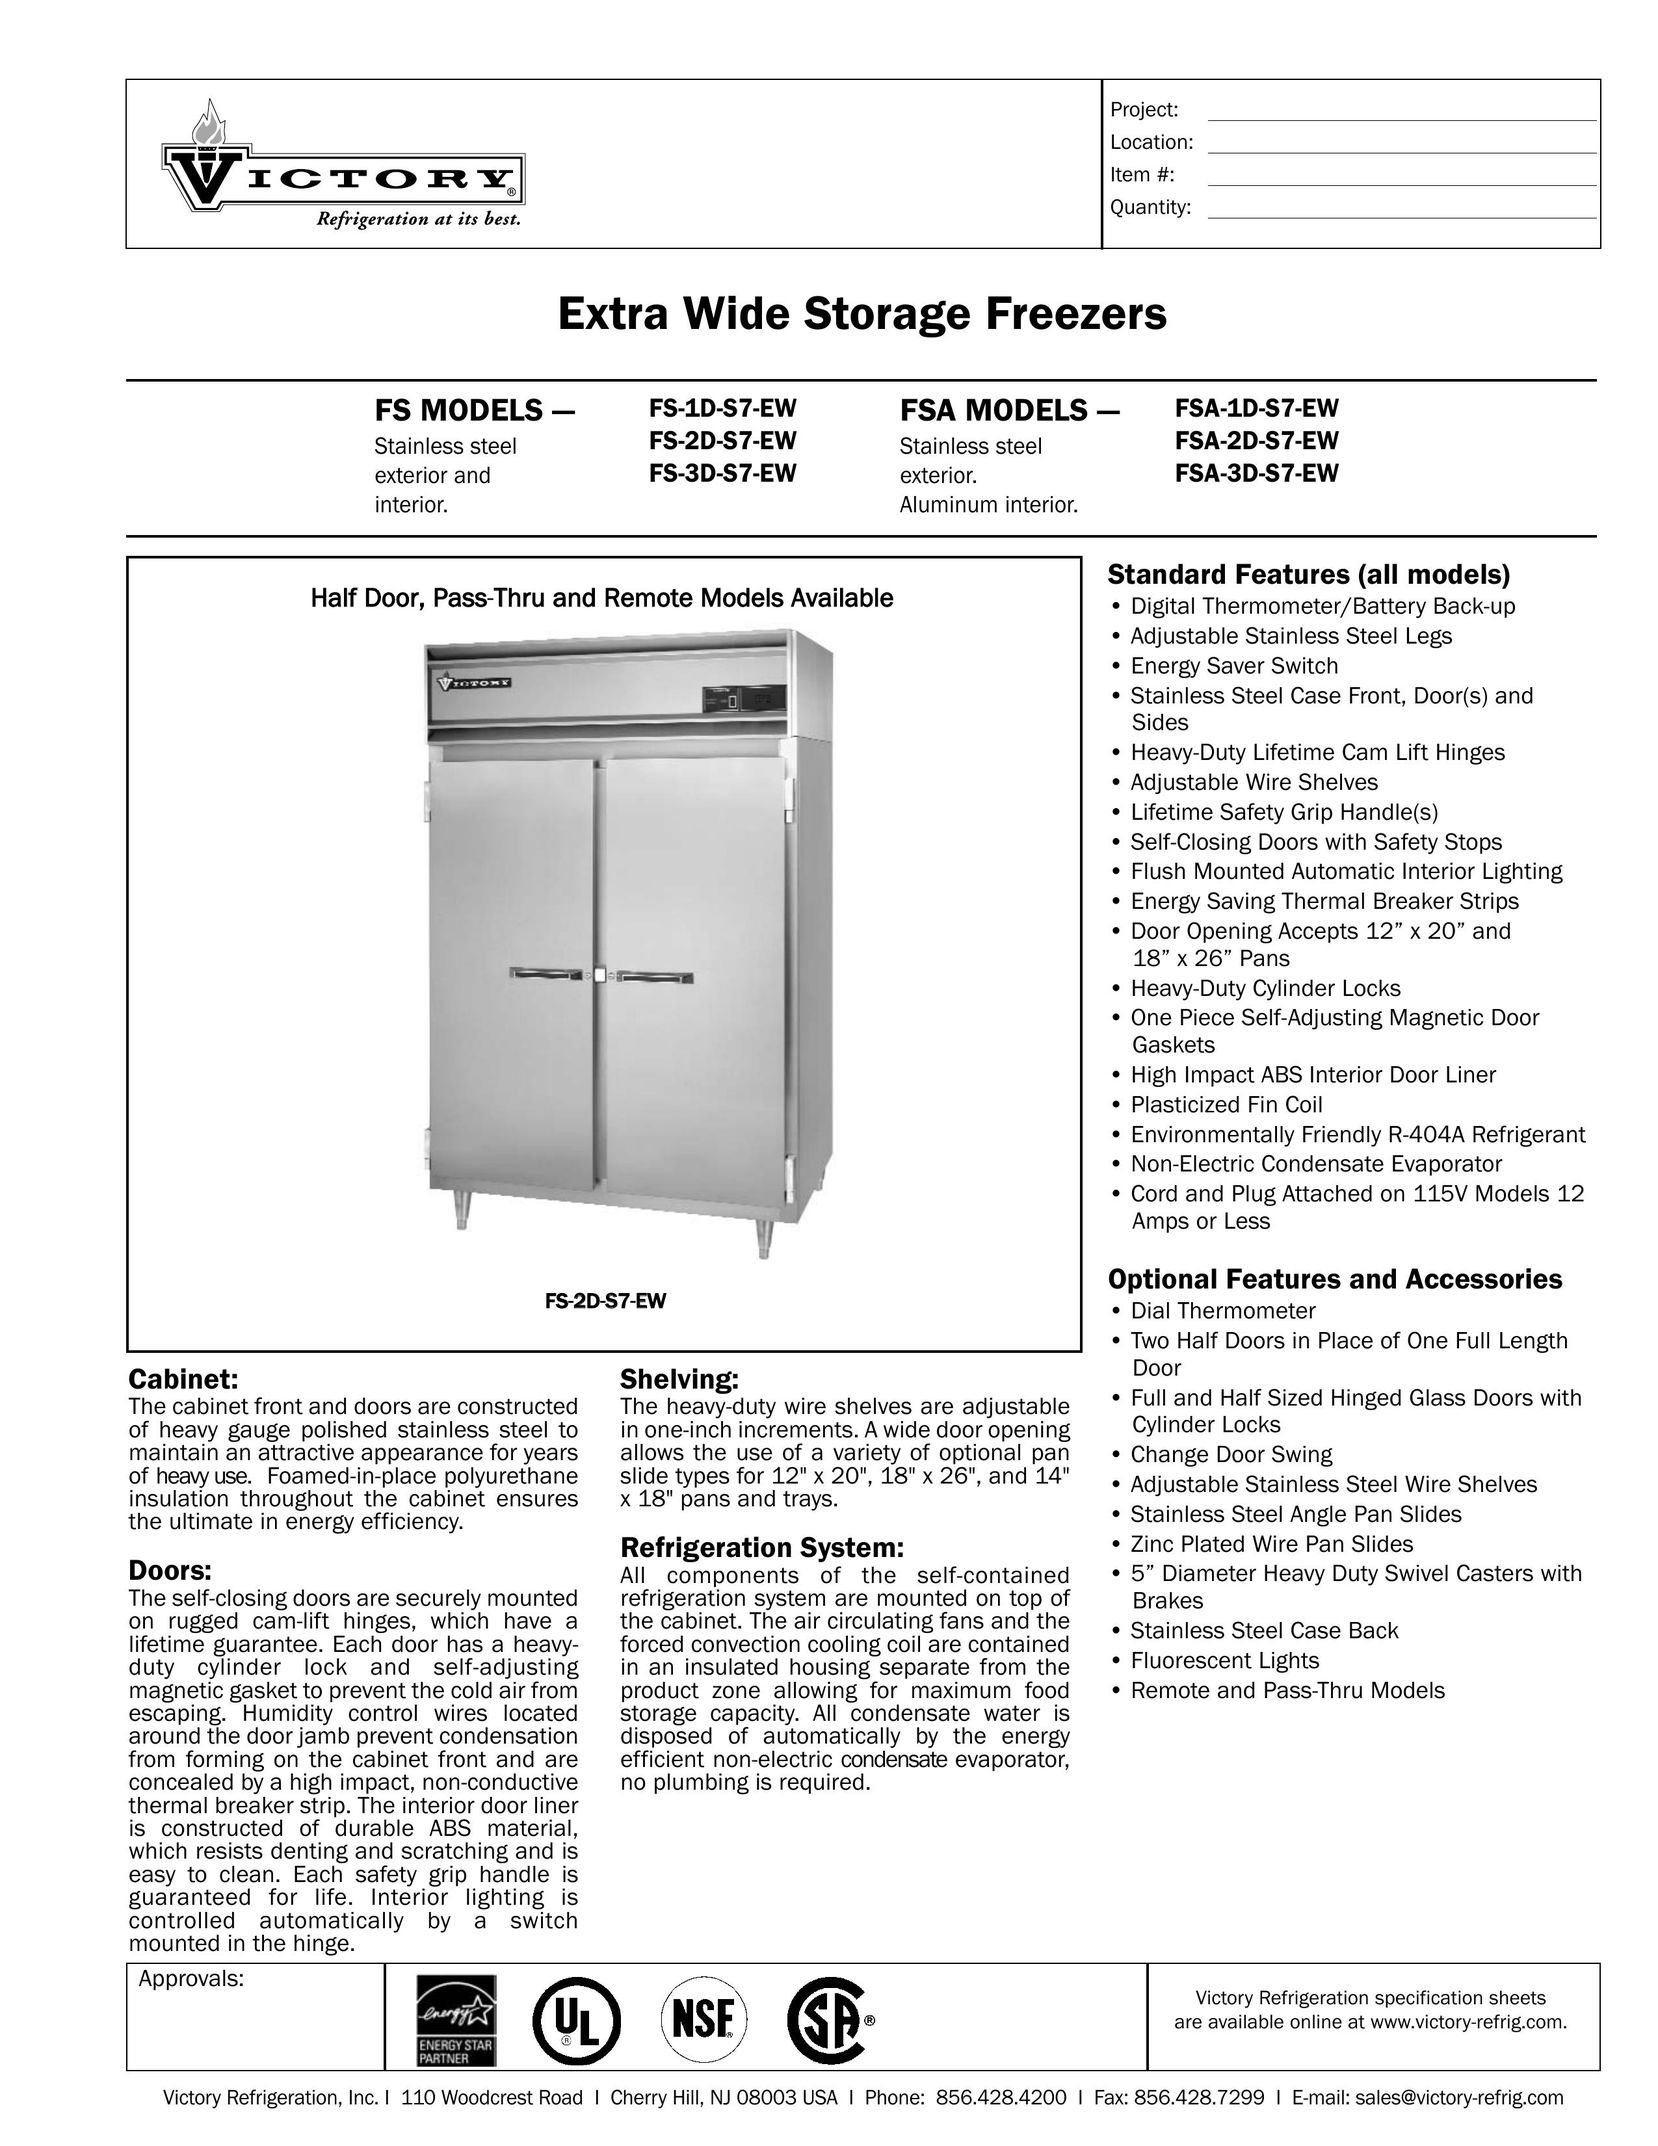 Victory Refrigeration FS-1D-S7-EW Freezer User Manual